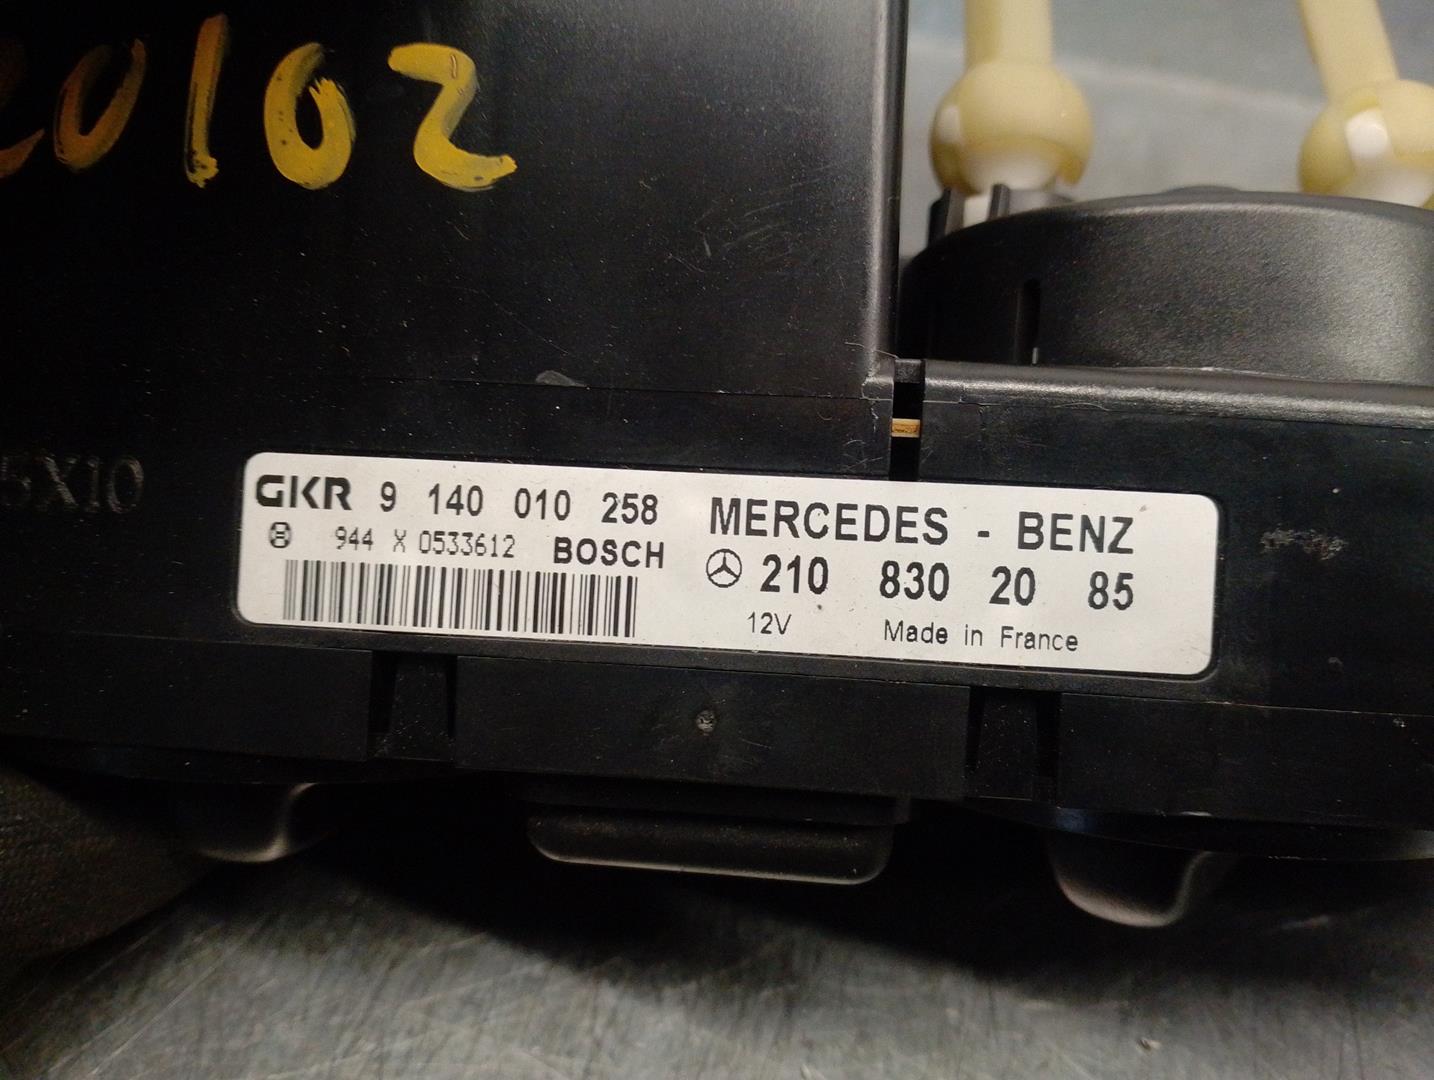 MERCEDES-BENZ E-Class W210 (1995-2002) Klimato kontrolės (klimos) valdymas 2108302085, 9140010258, GKR 24222876